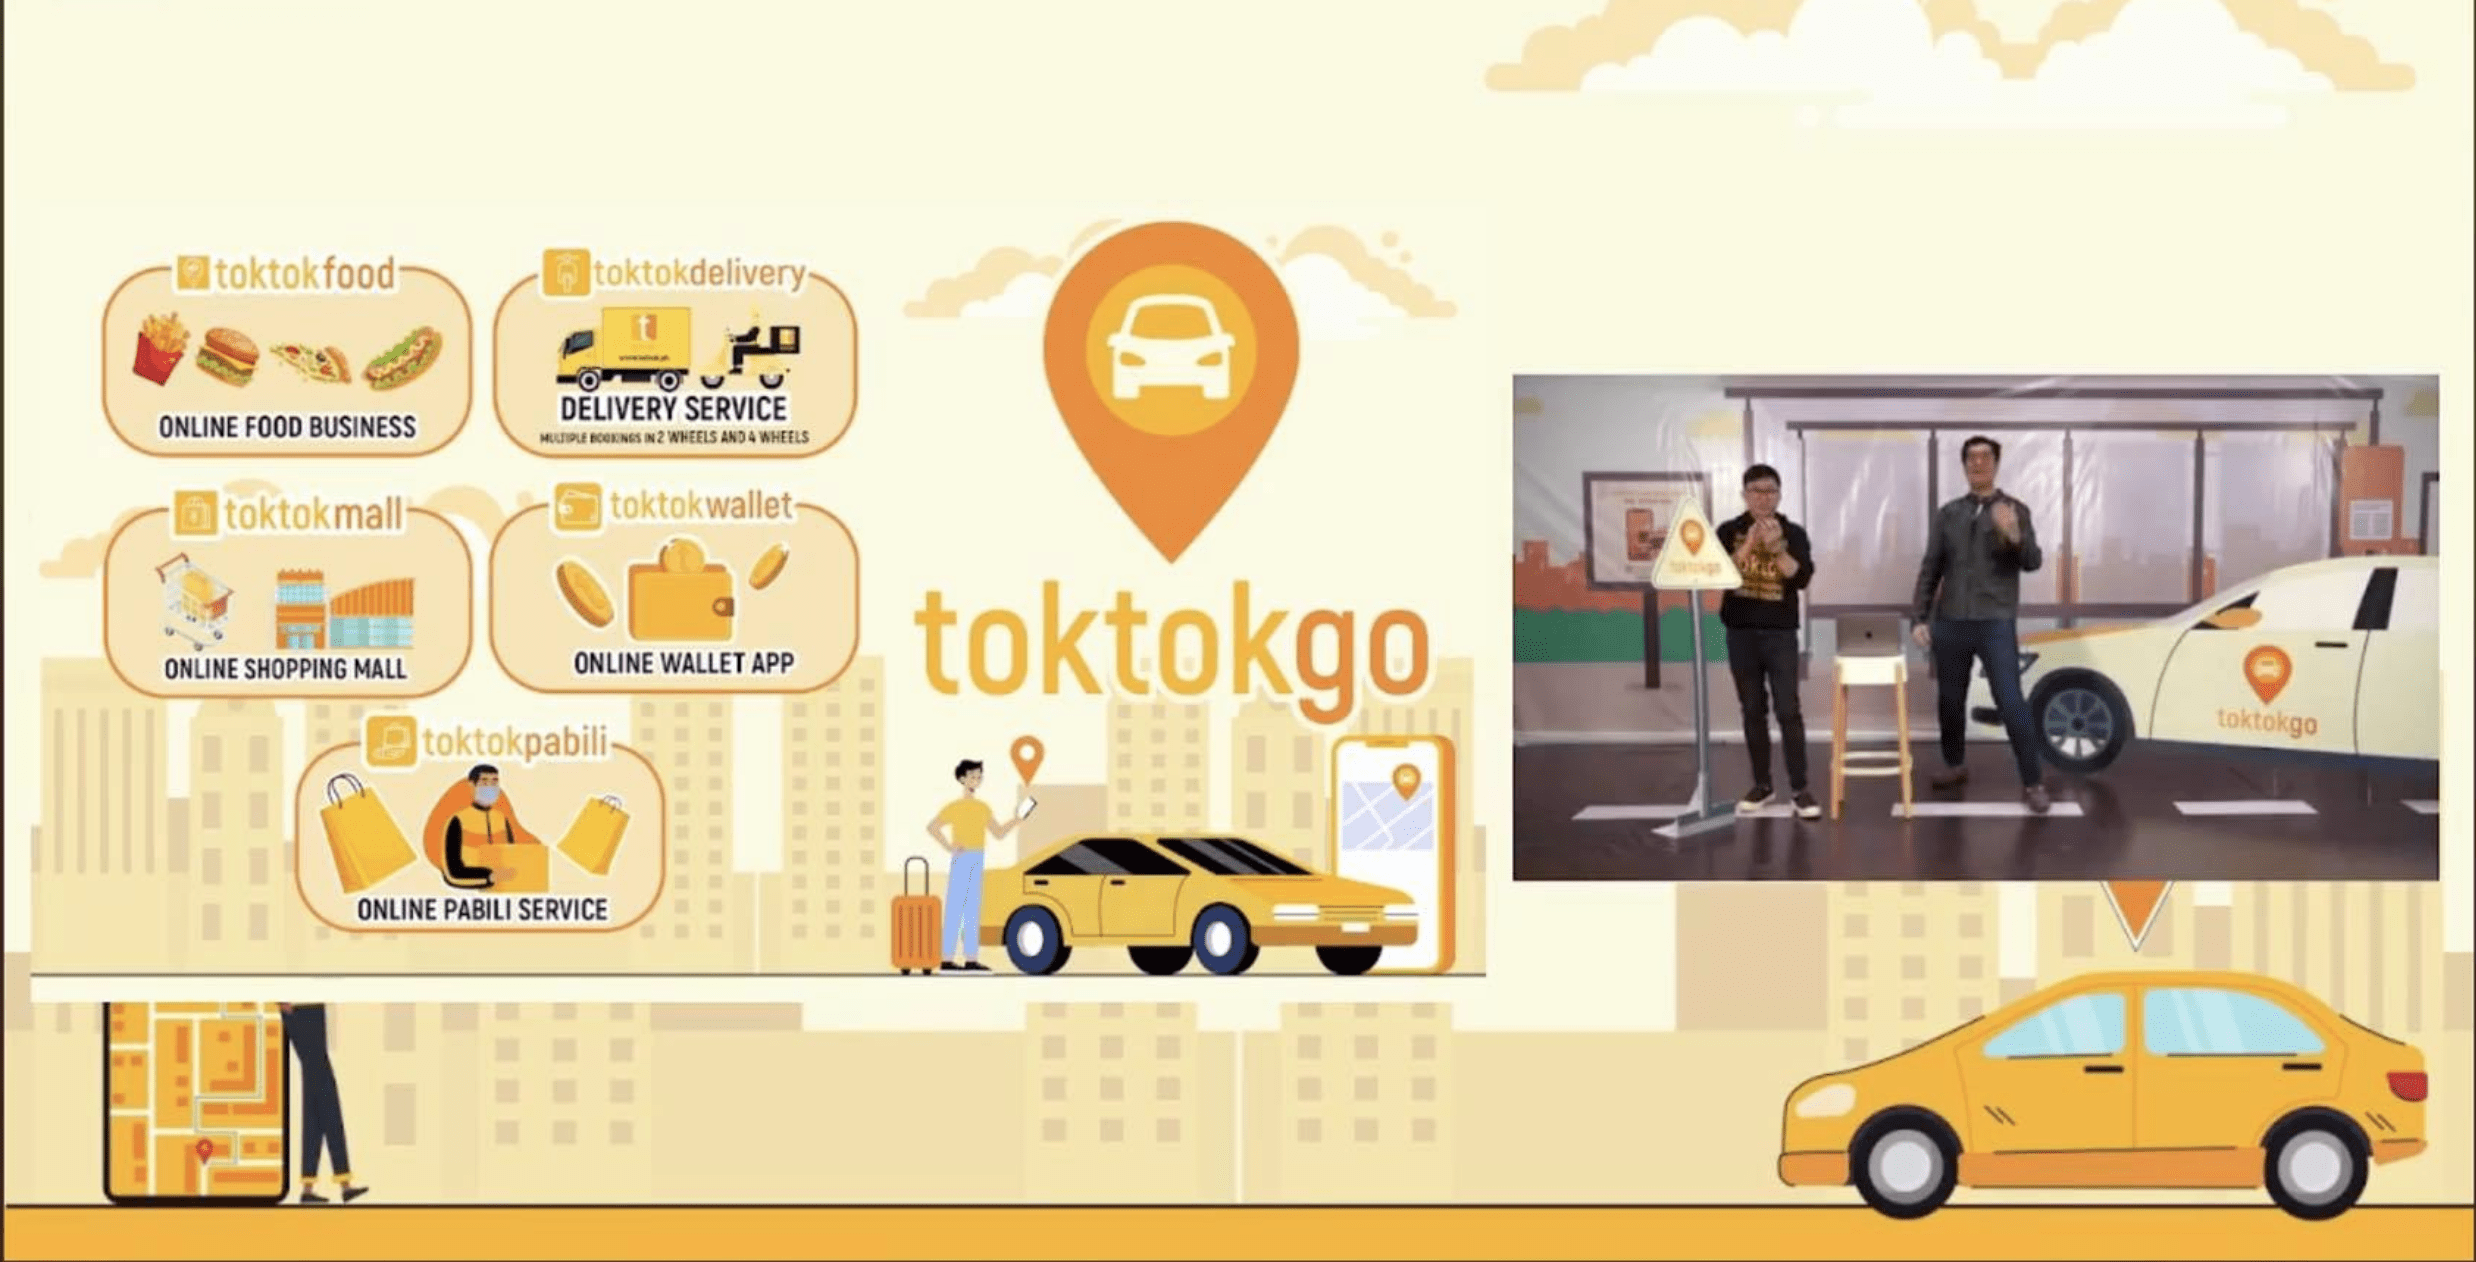 How to be a Toktok Go Online Business Partner